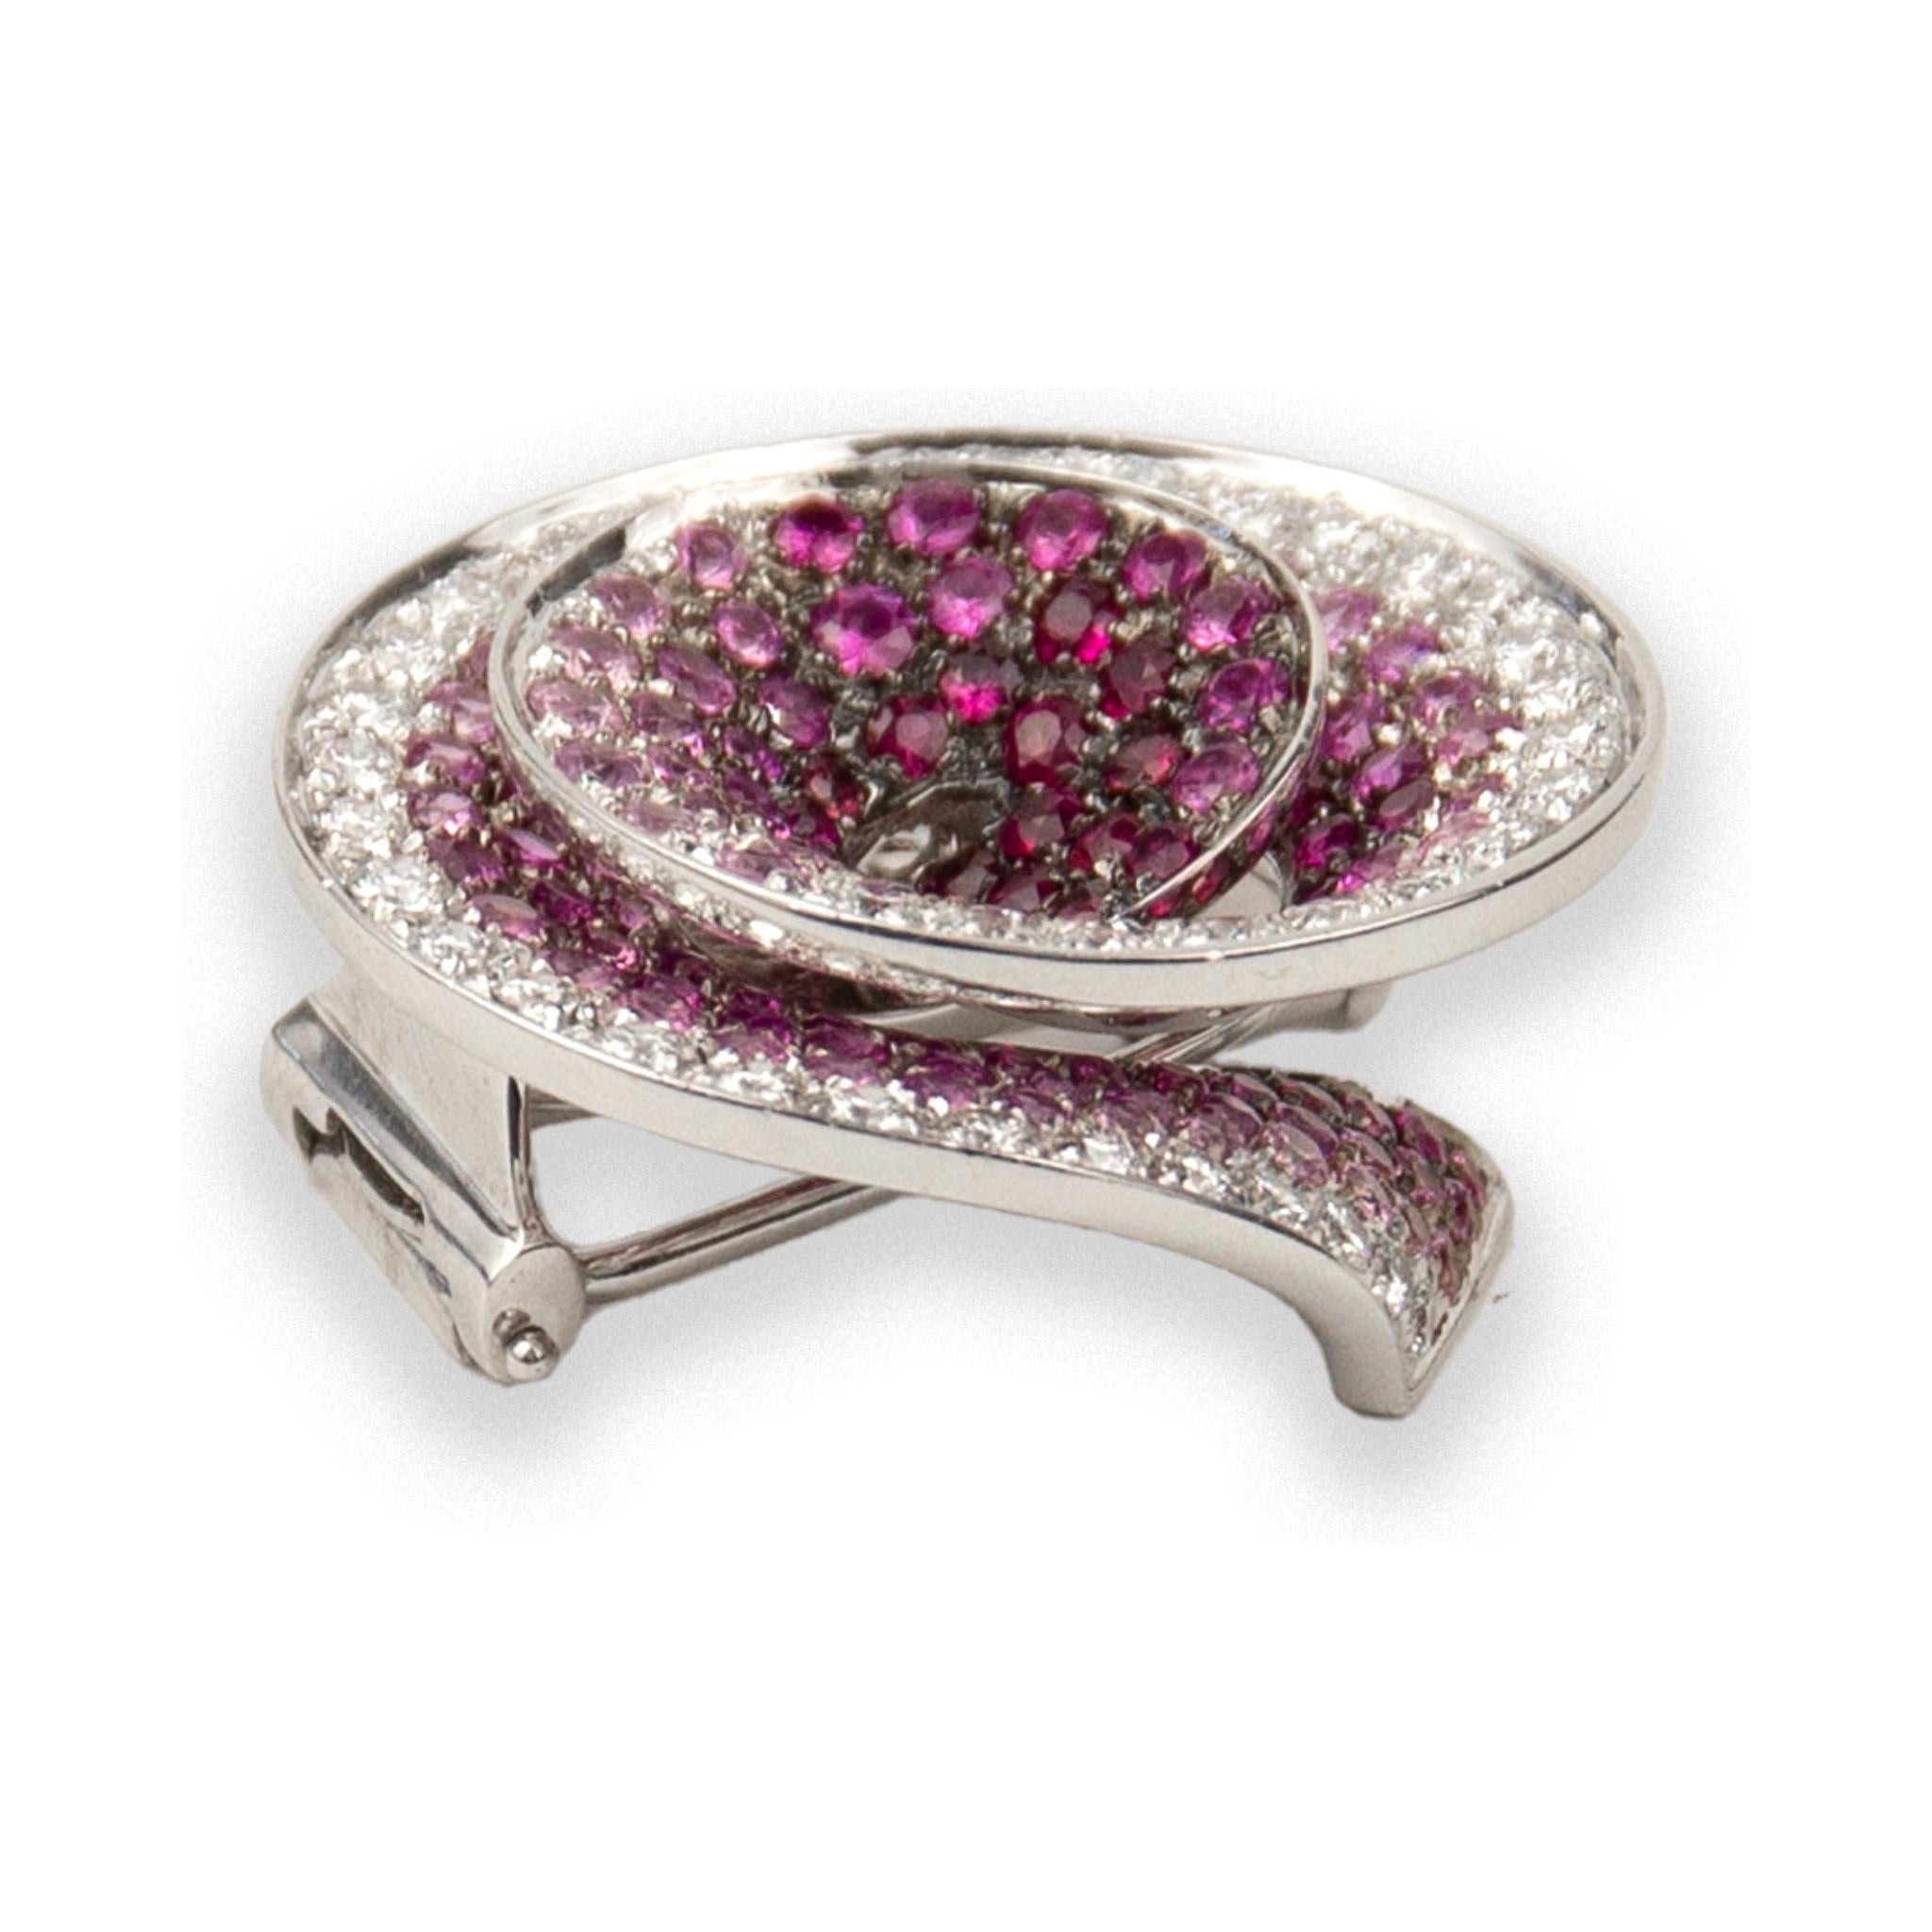 Diamond: 1.33ctw
Pink Sapphire: 4.17ctw
Retail: $16,050.00
SKU: BLU01278